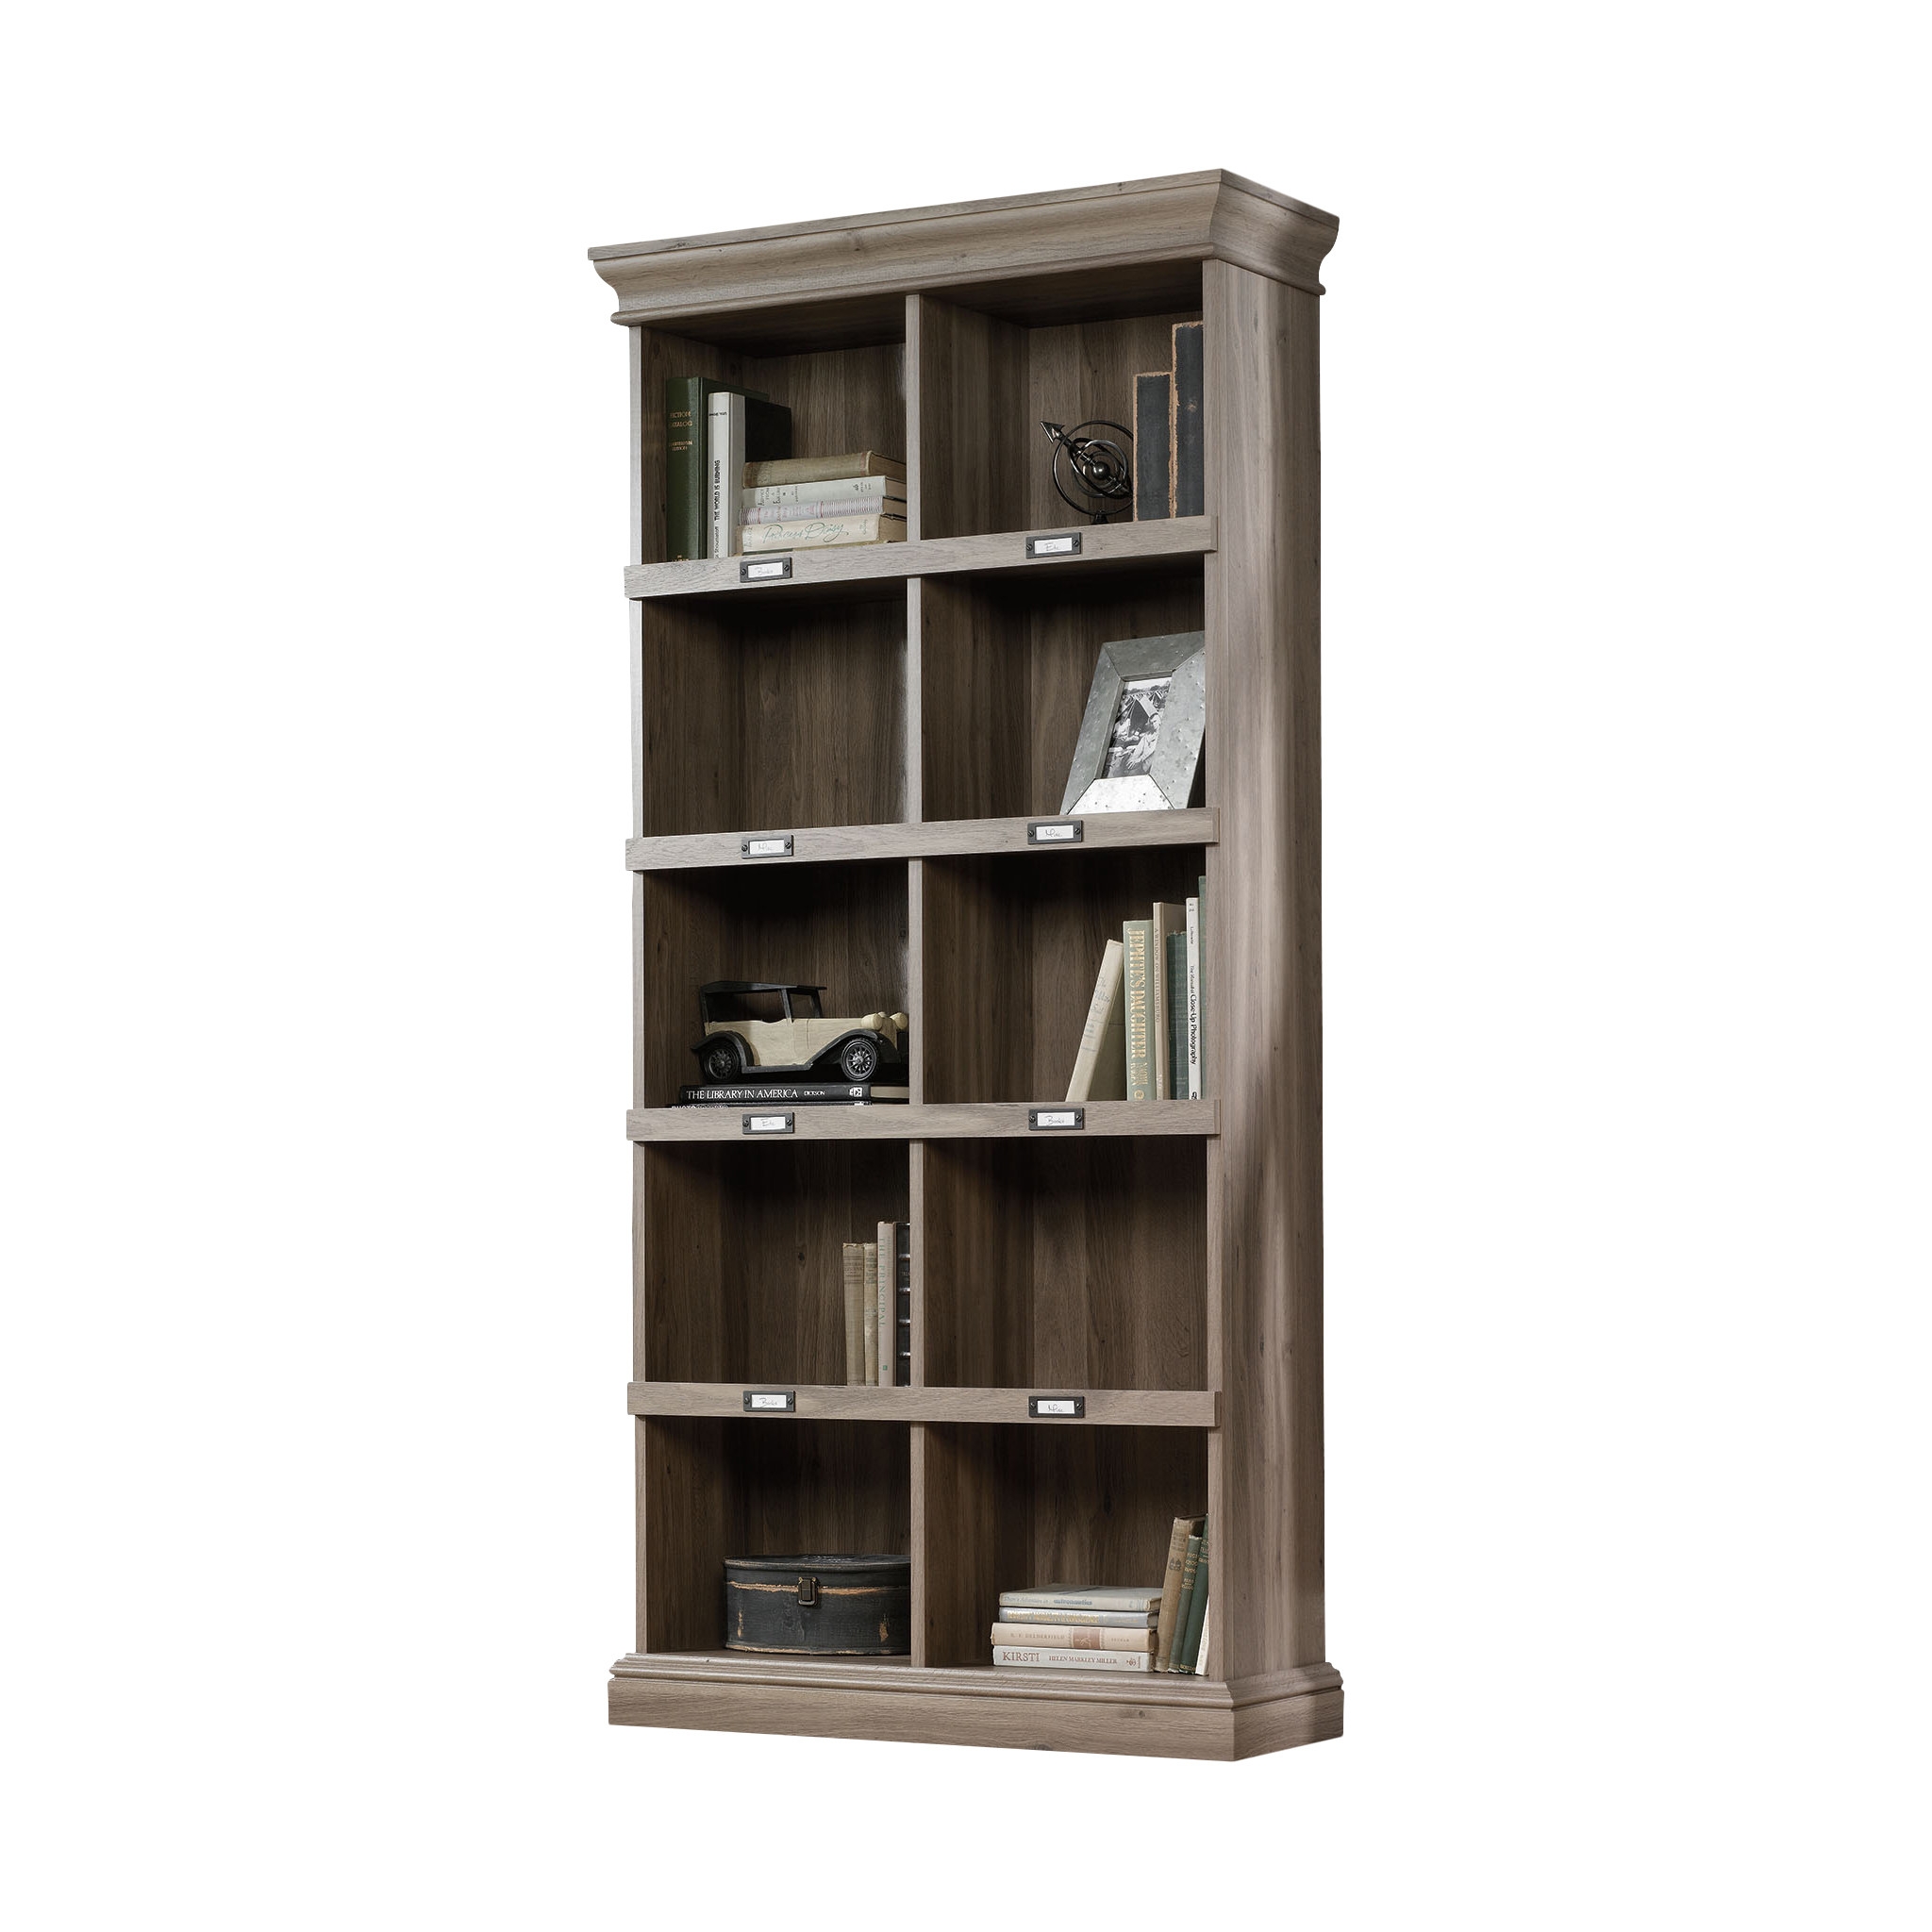 Bowerbank 75" Standard Bookcase - Image 2